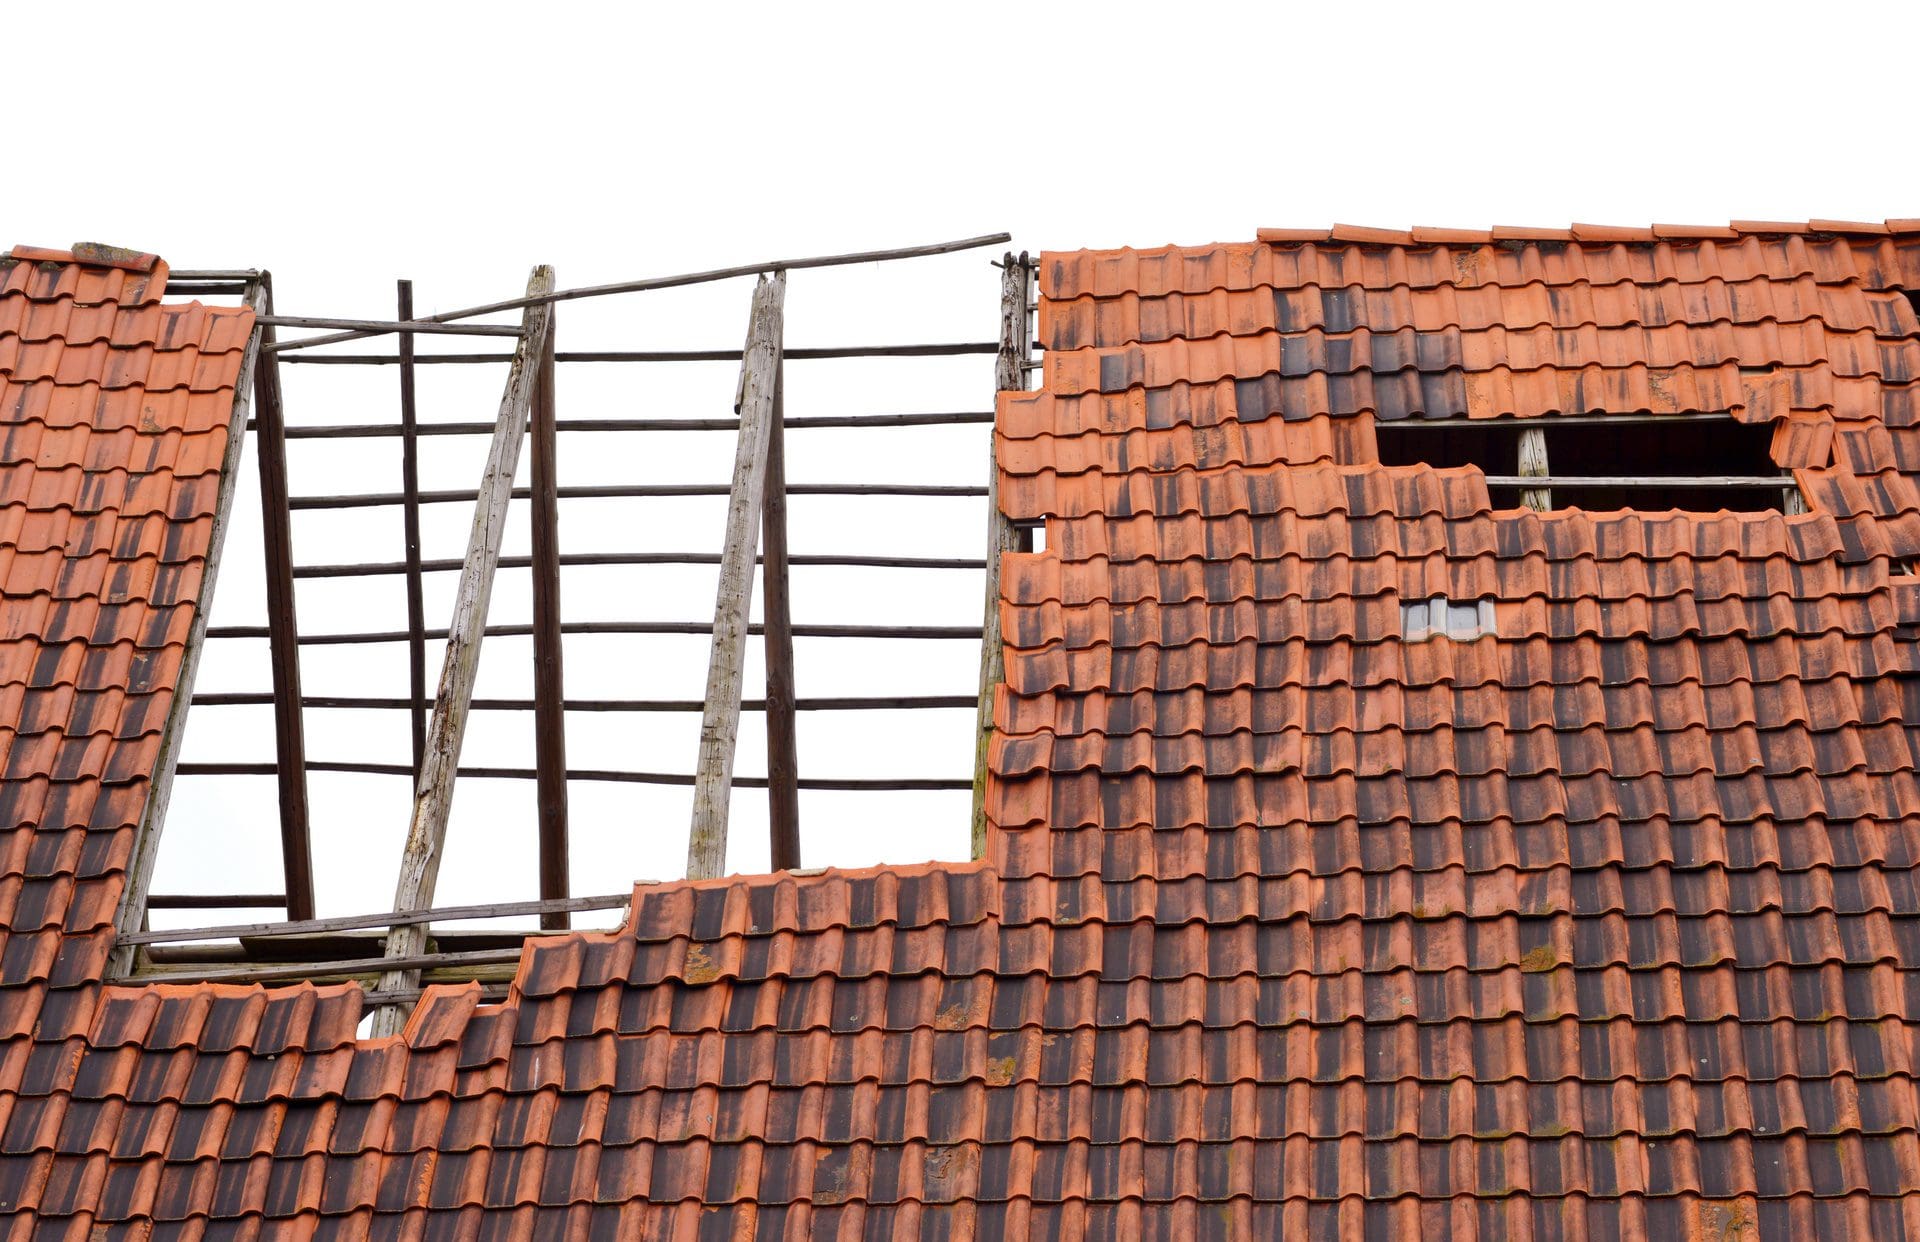 Sturmschaden am Dach | Wer zahlt bei Sturmschäden an Haus und Grundstück? (© Sinuswelle / stock.adobe.com)